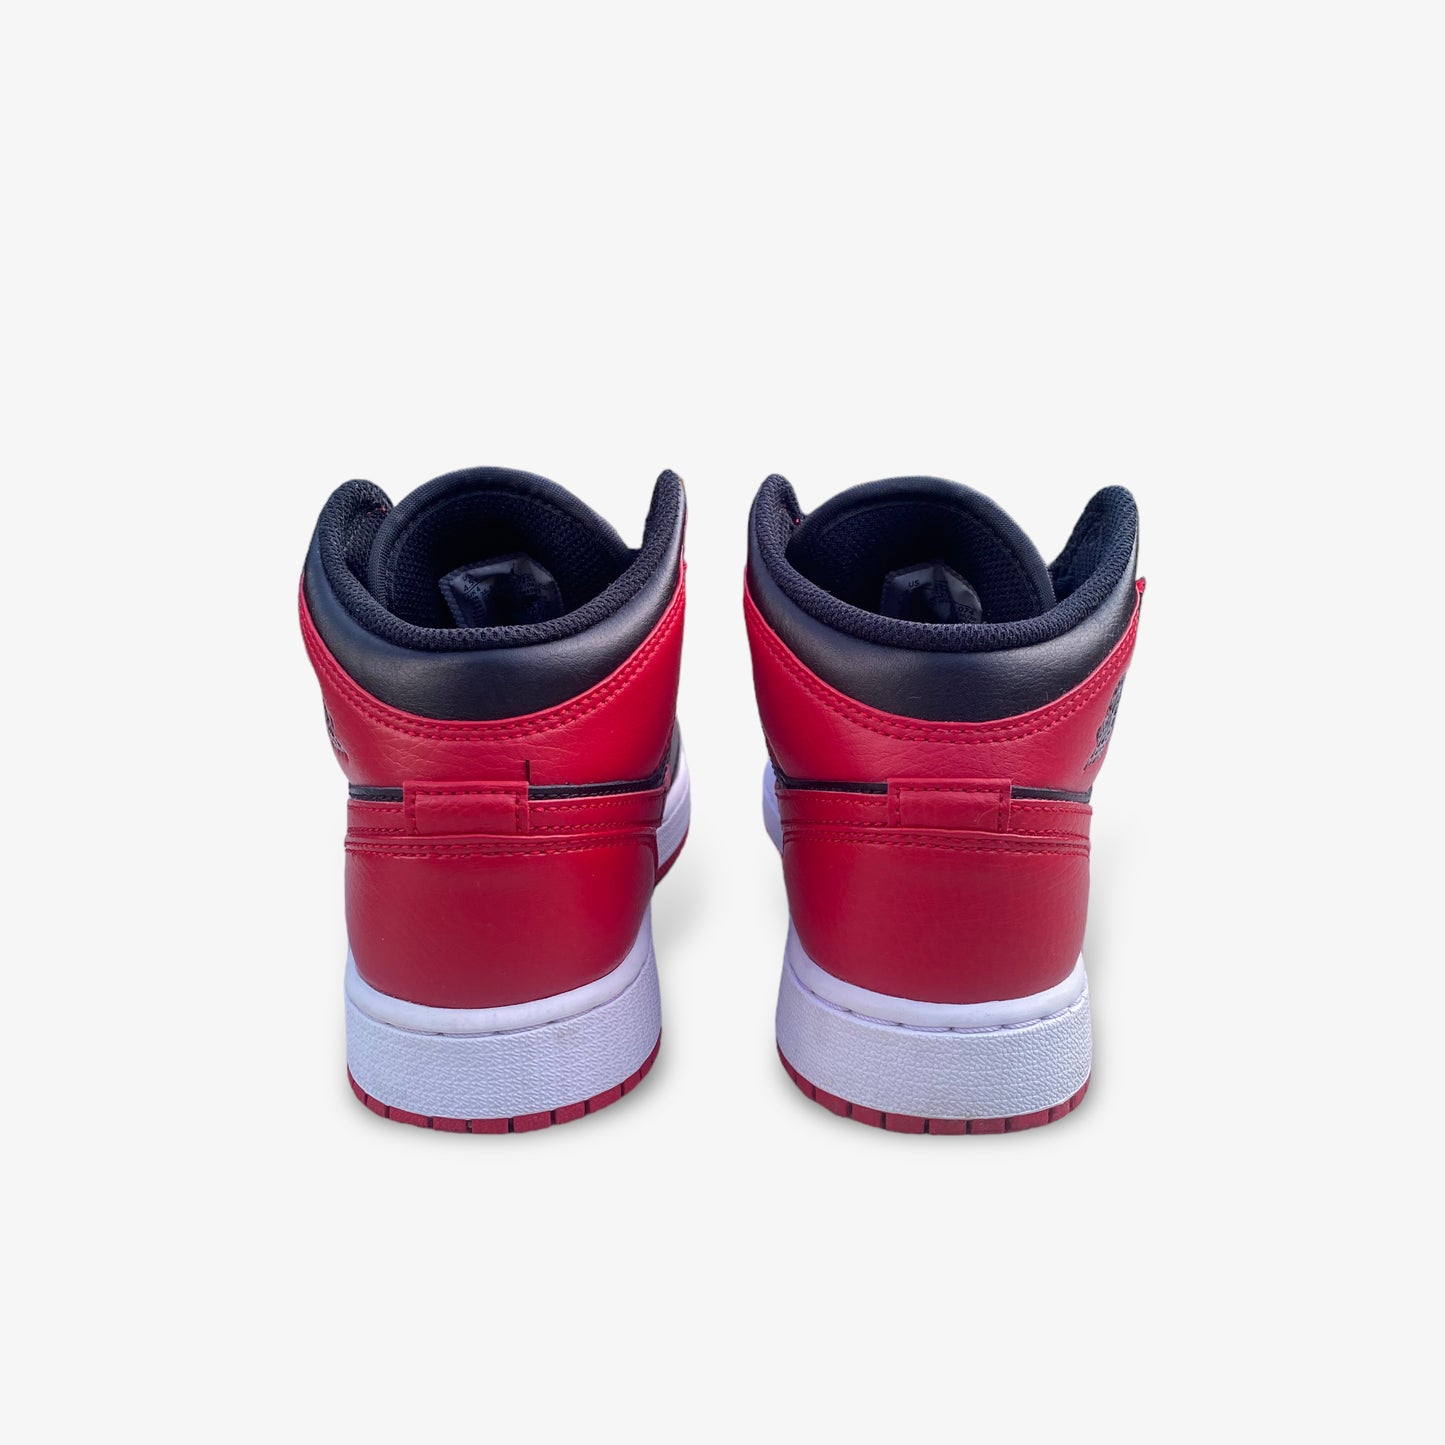 Air Jordan 1 Mid “Banned” (2020)